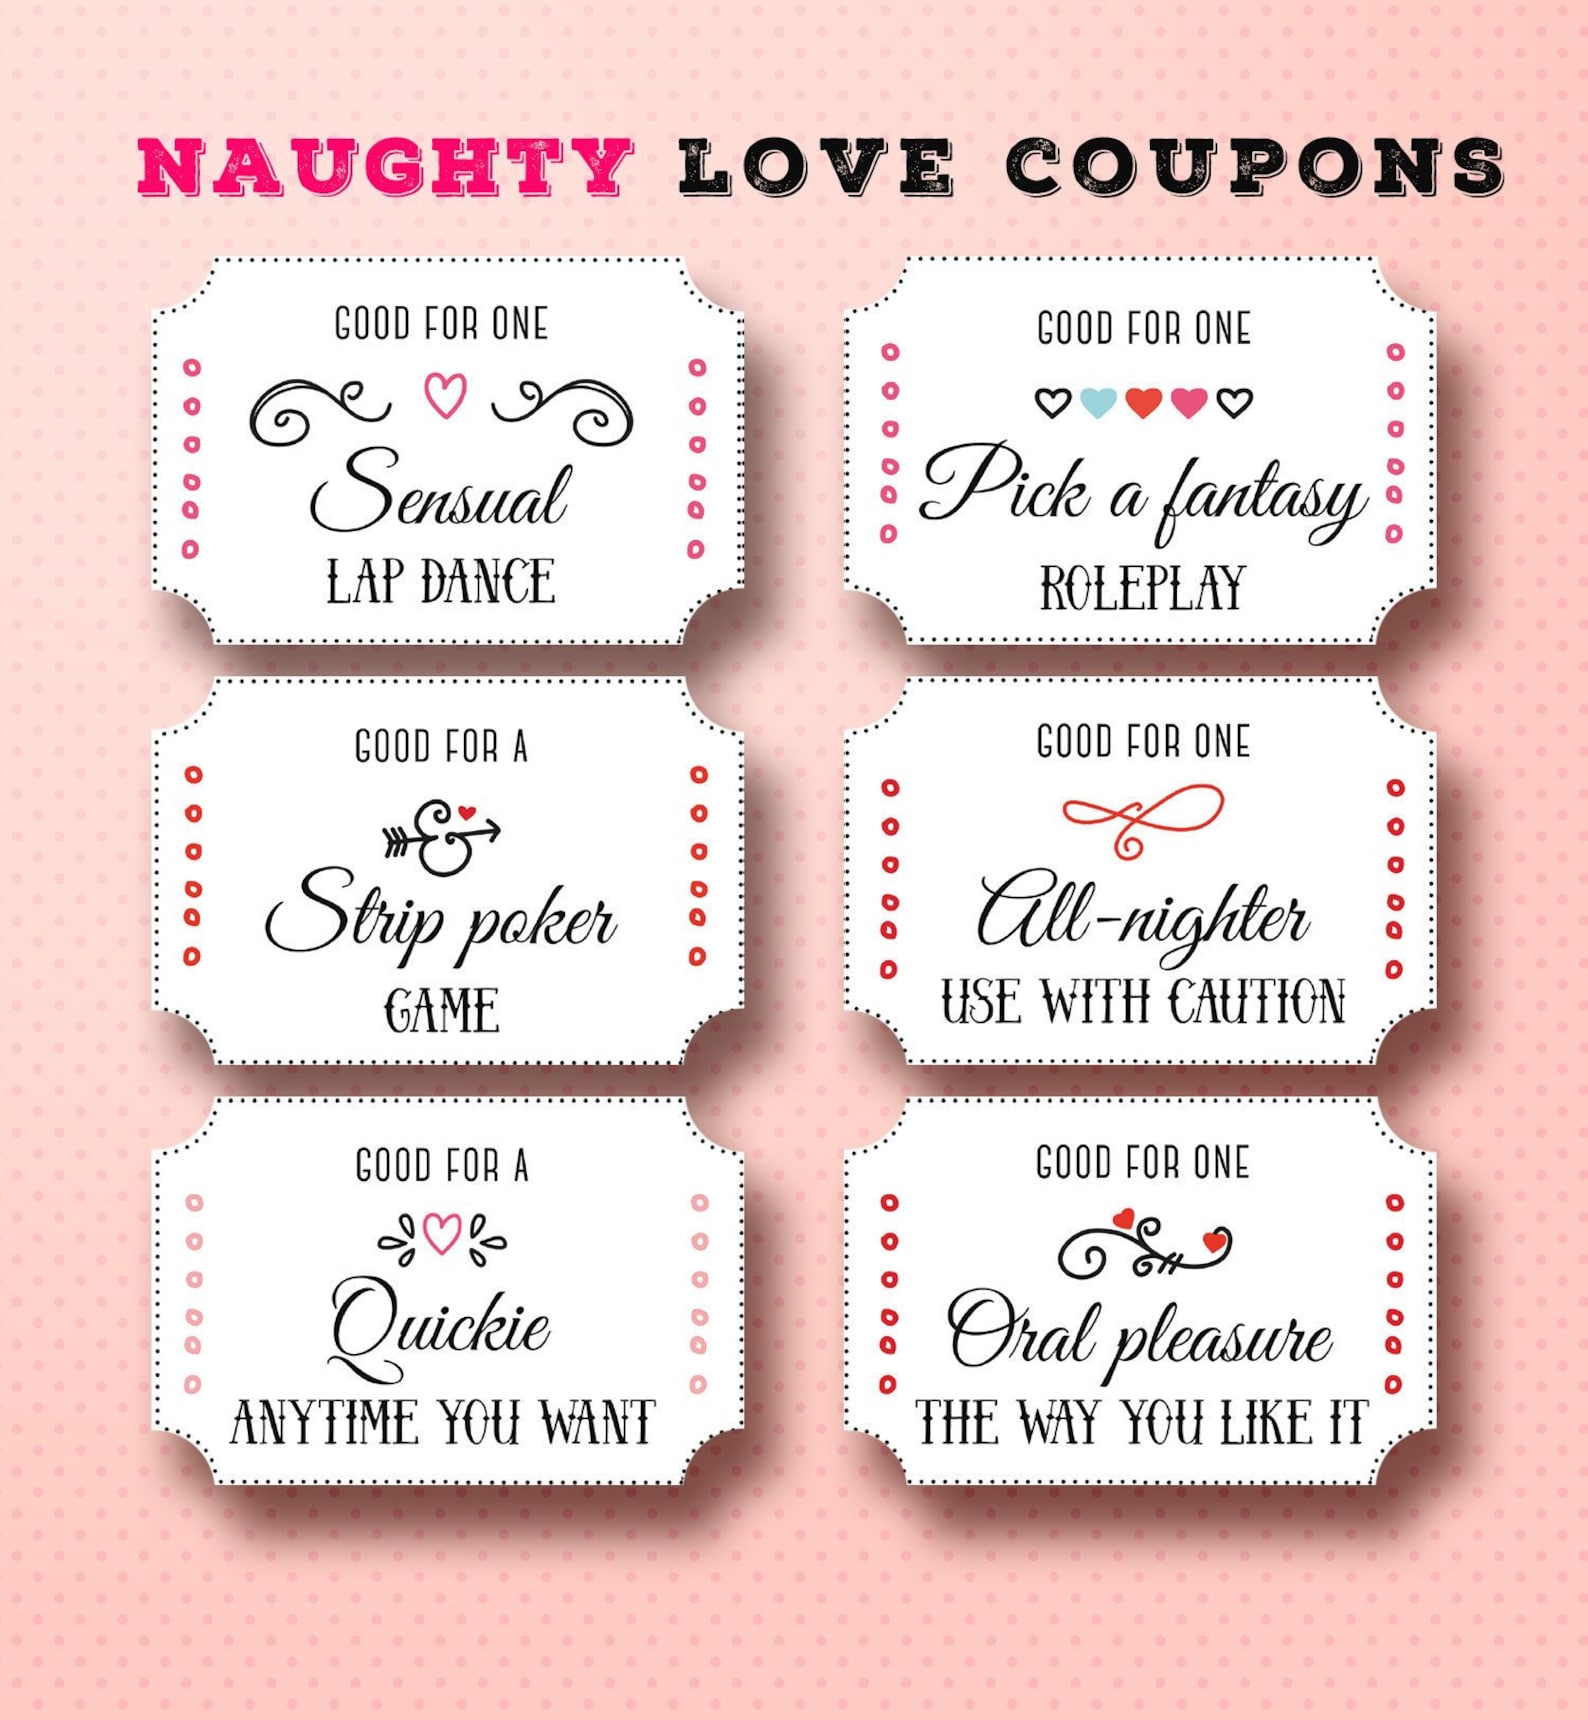 naughty-coupon-book-for-him-love-coupon-for-him-sex-coupon-etsy-hong-kong